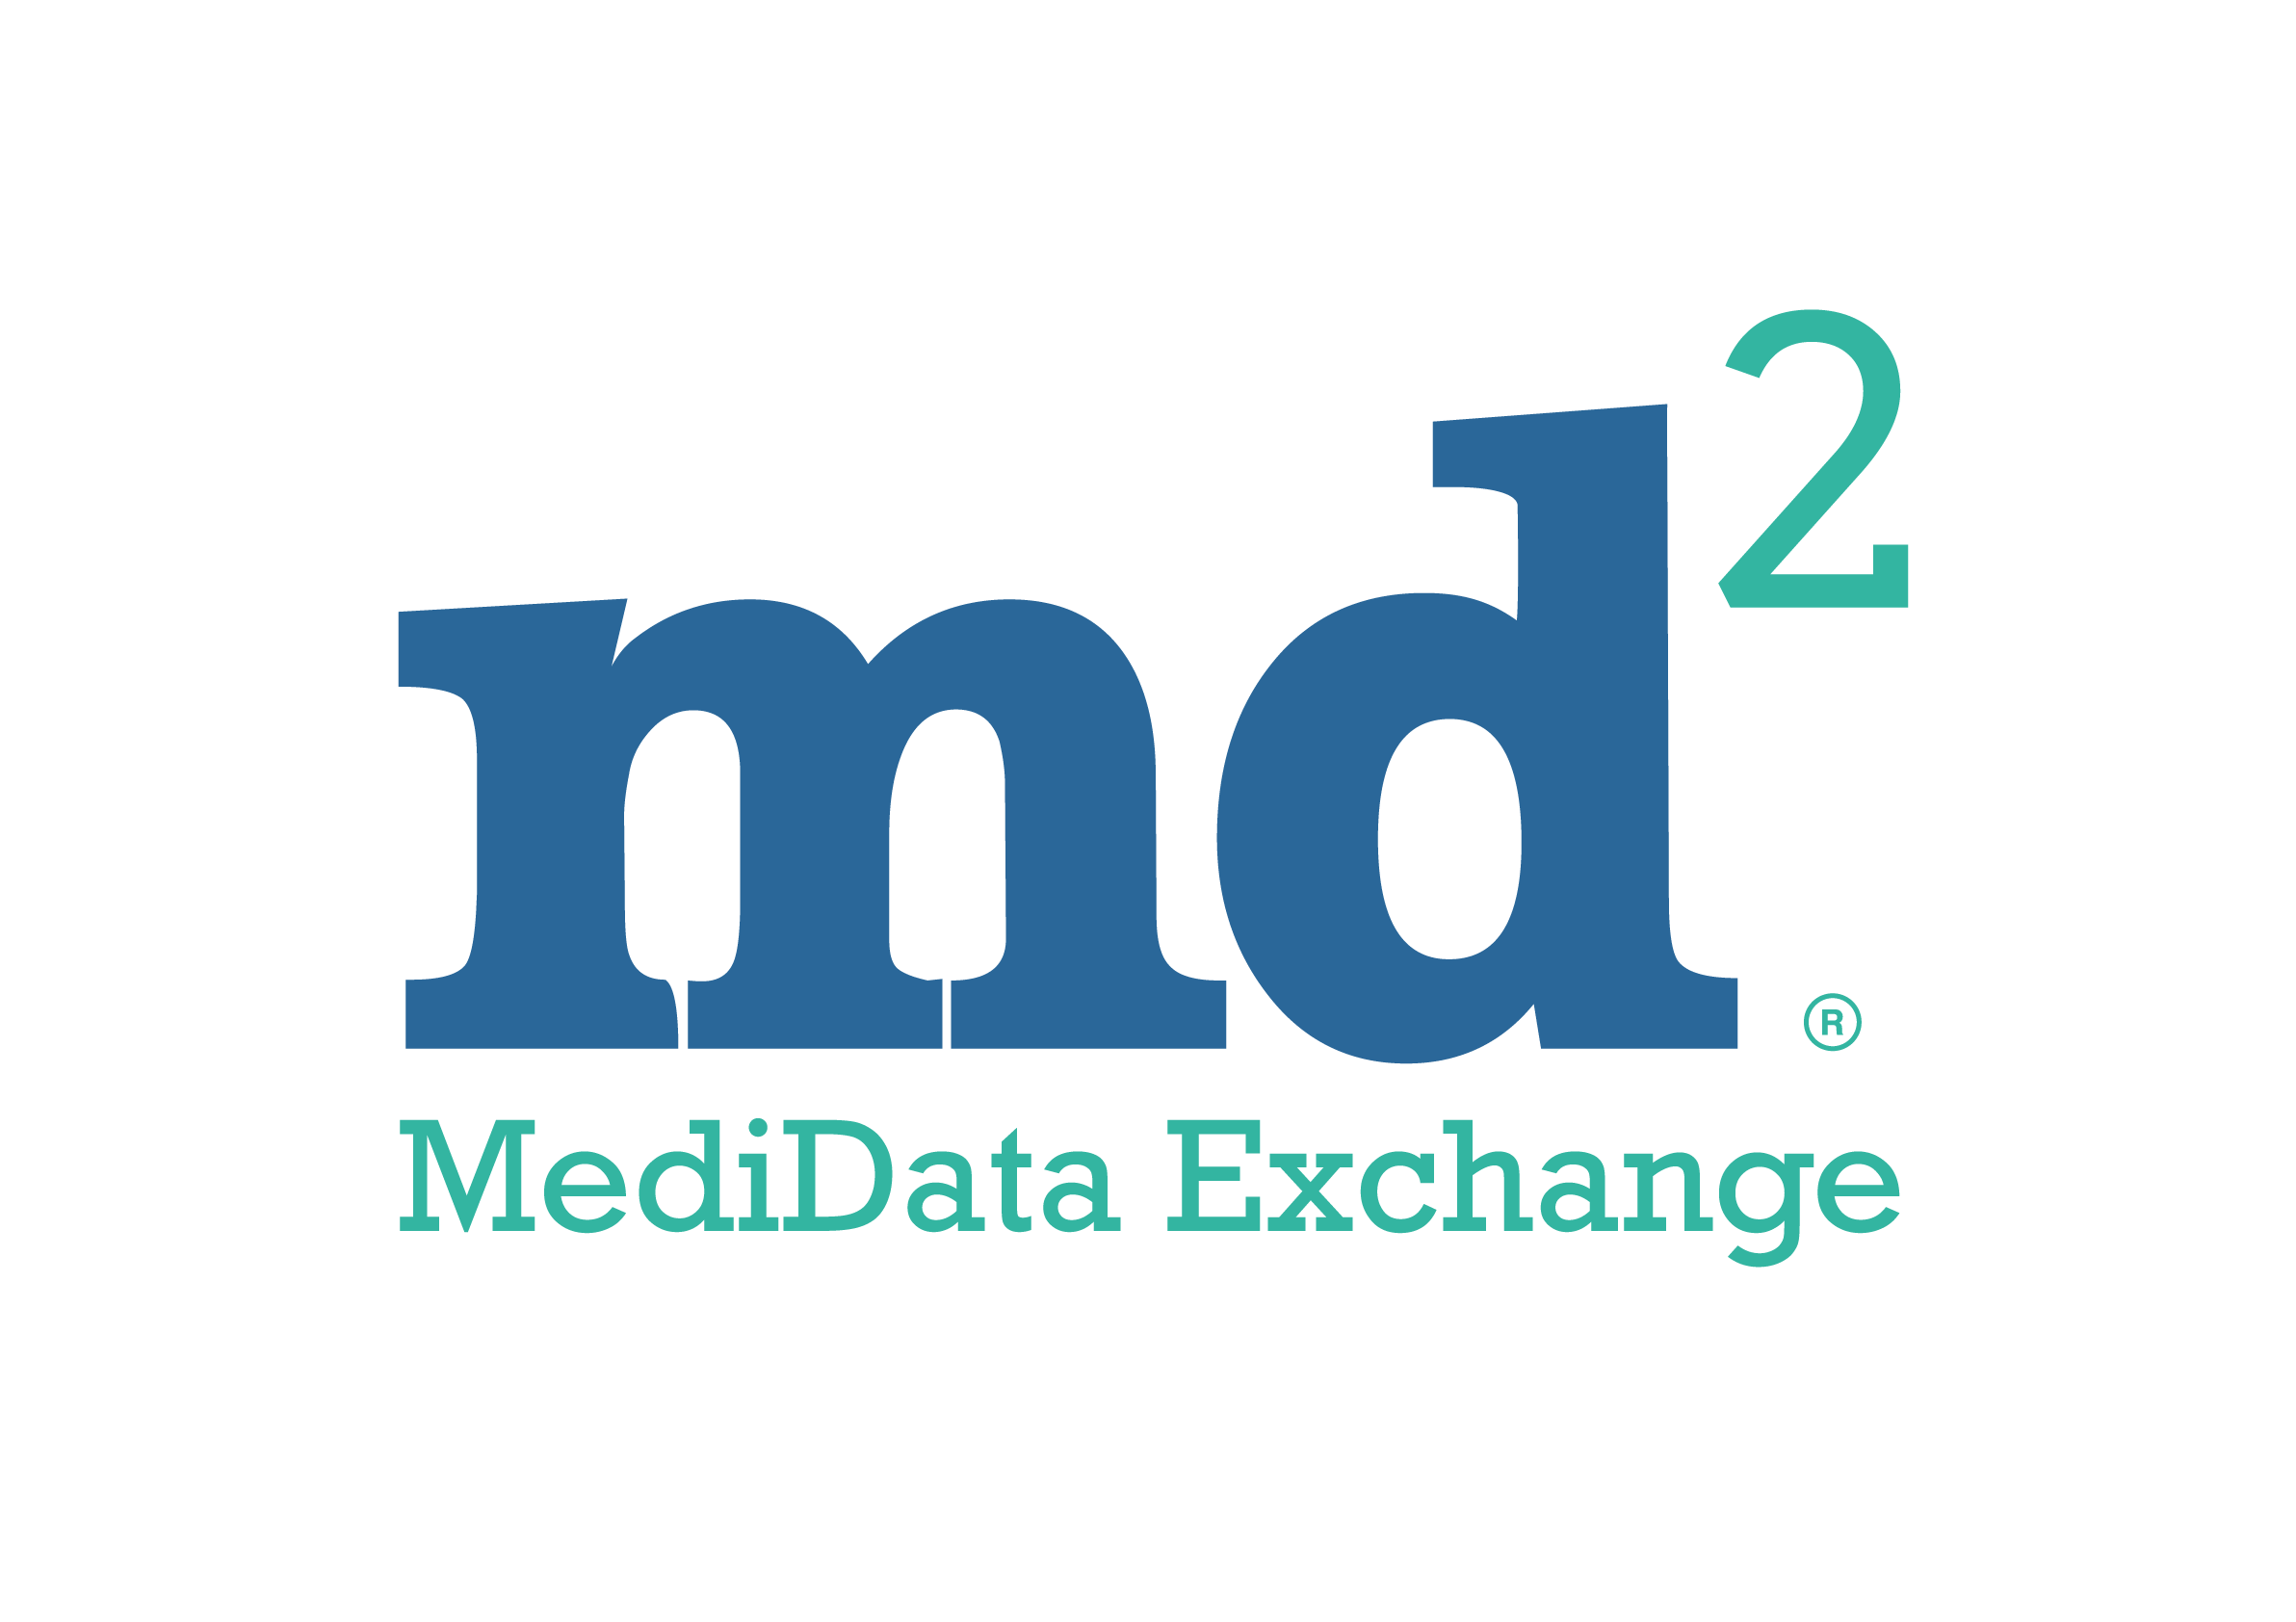 Medidata Logo - MediData Exchange - Pulse Live